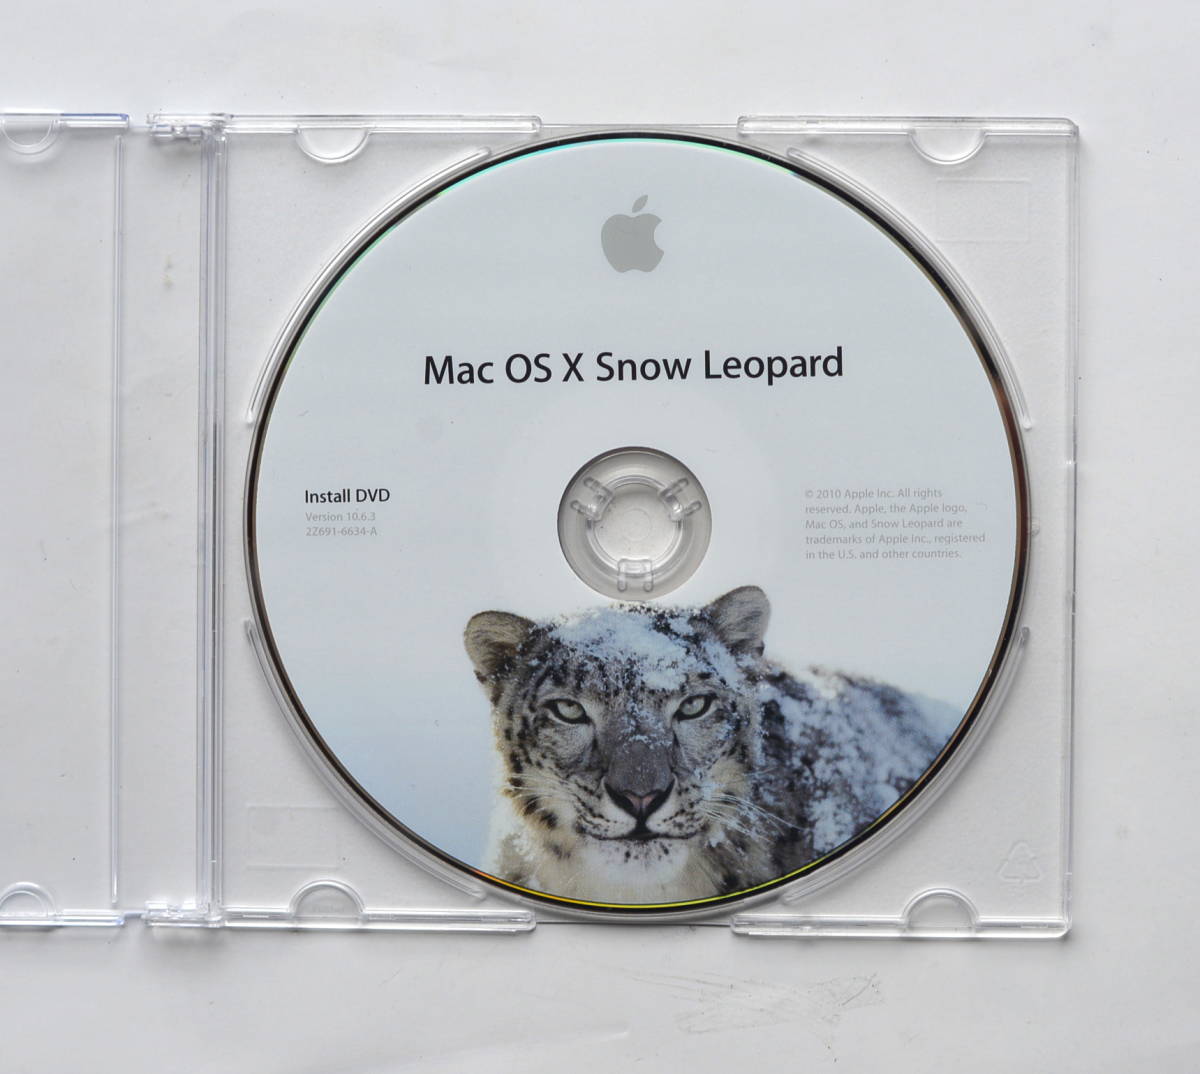 Mac OS X 10.6.3 Snow Leopard стандартный распродажа полный install DVD only + 10.6.8 выше данные -